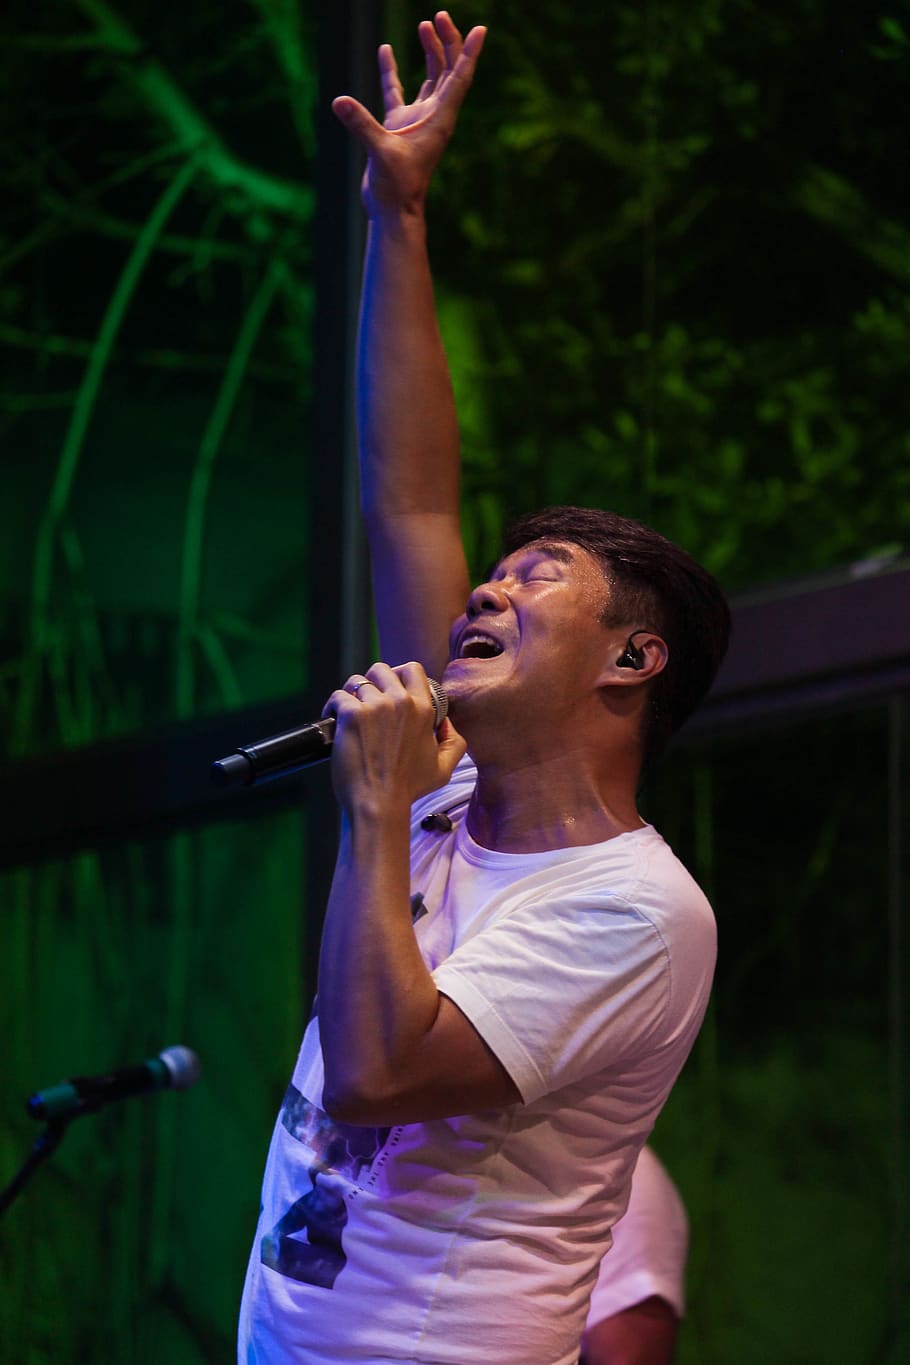 Man Wearing White T-shirt Singing at the Stage, artist, band